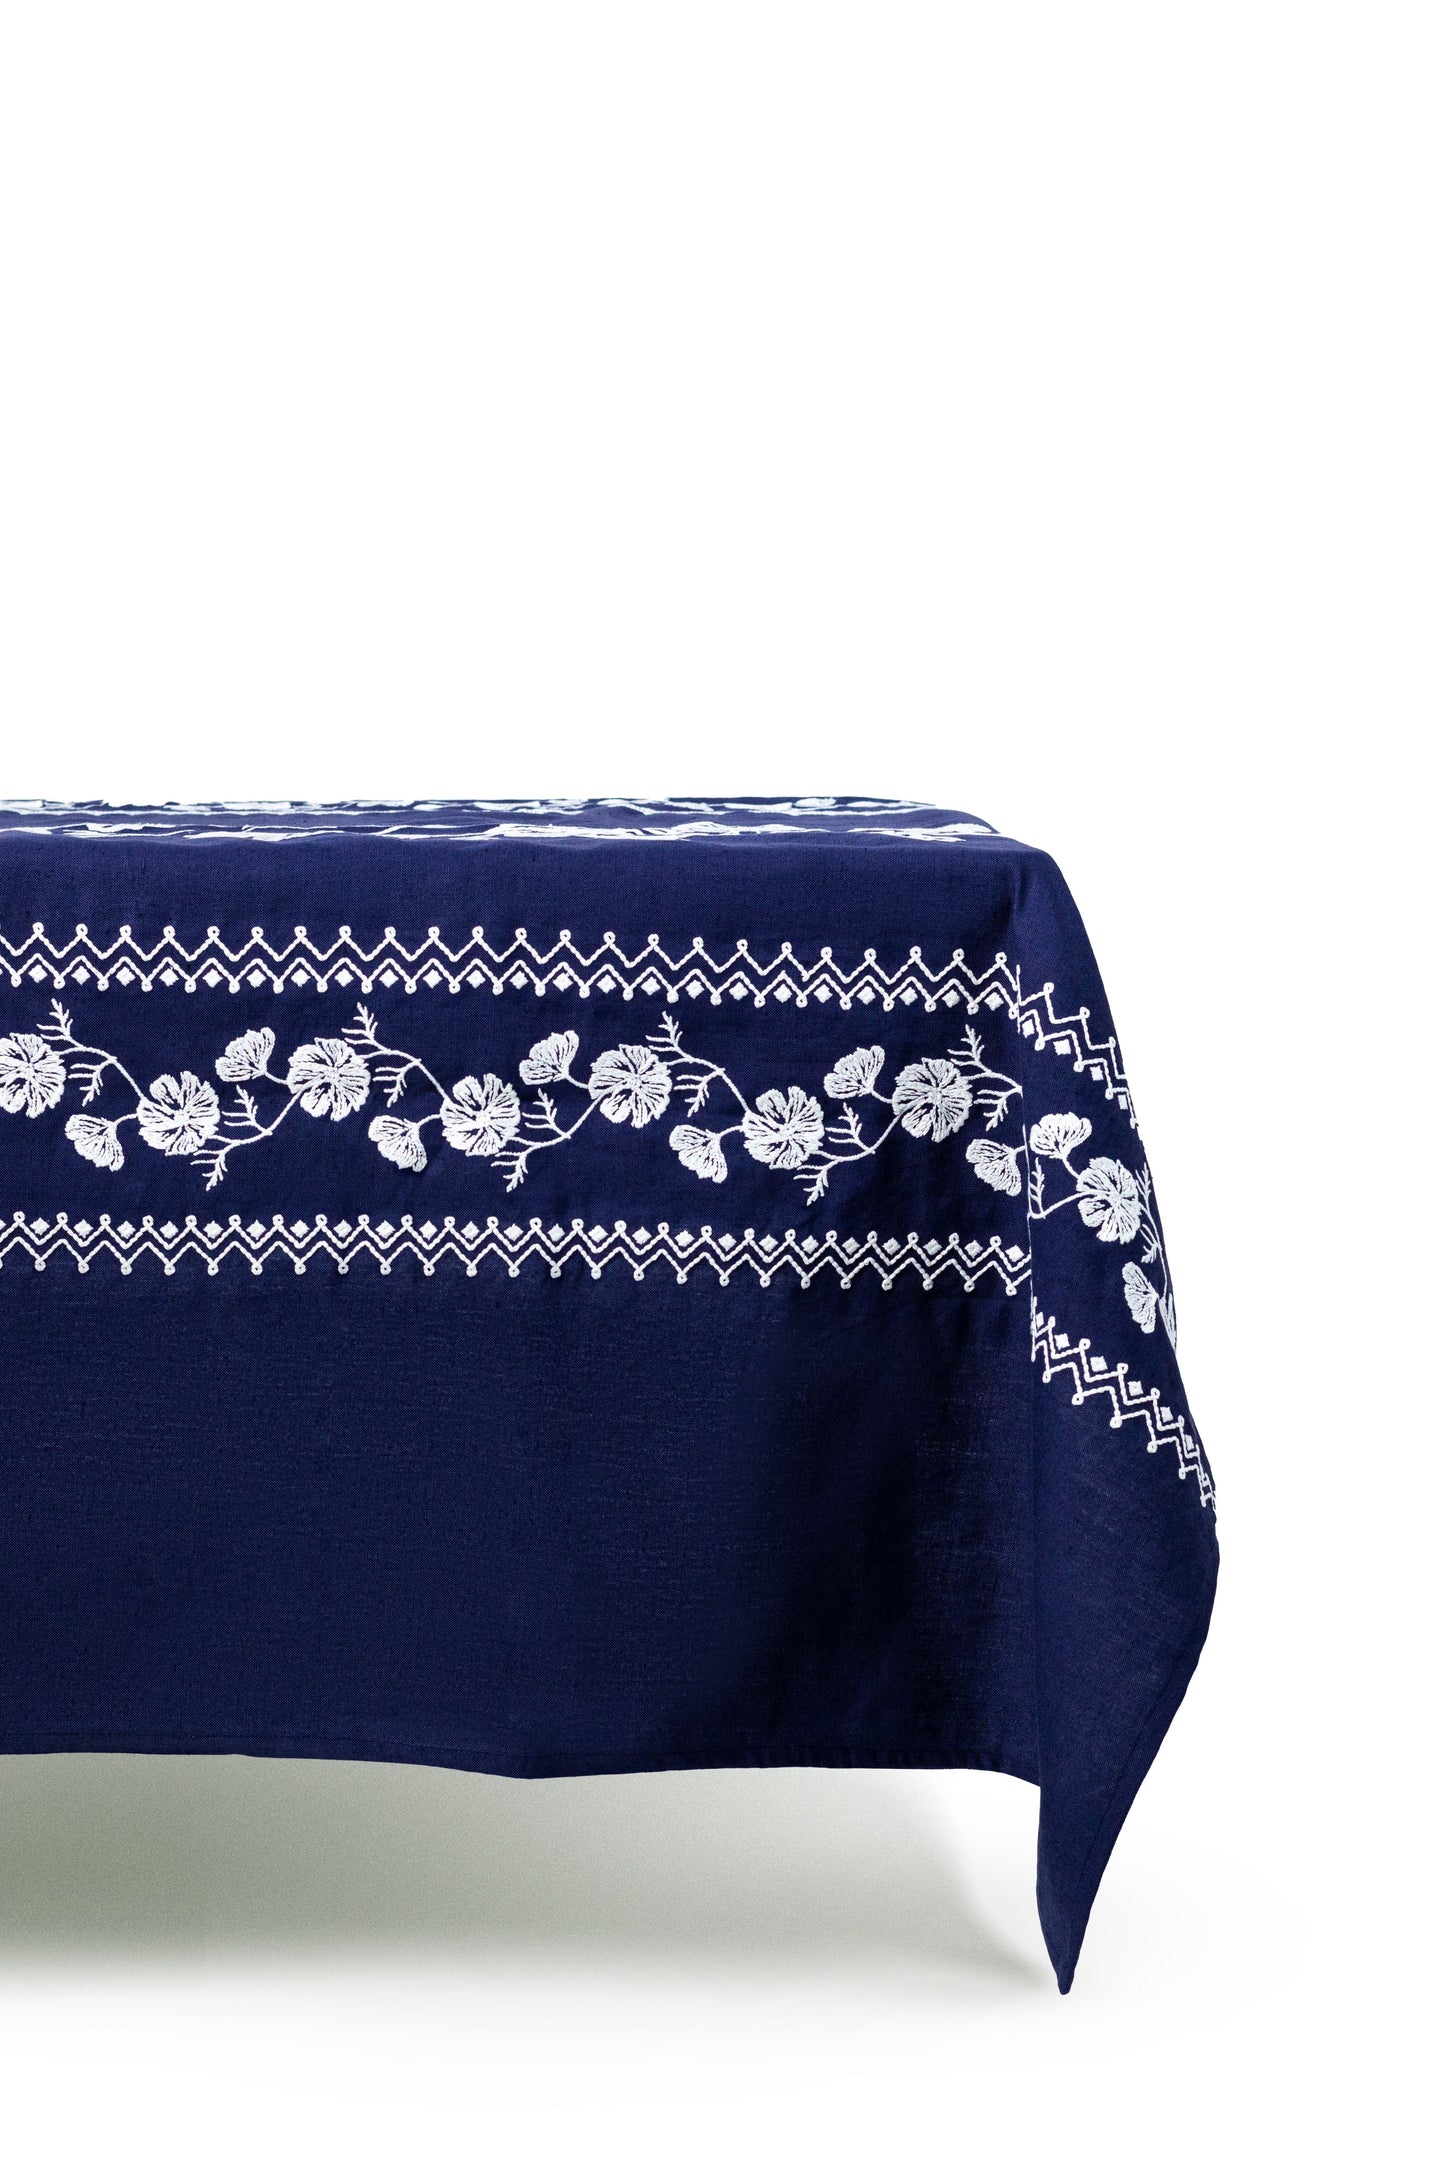 Cosmo Navy Rectangular Tablecloth for 8